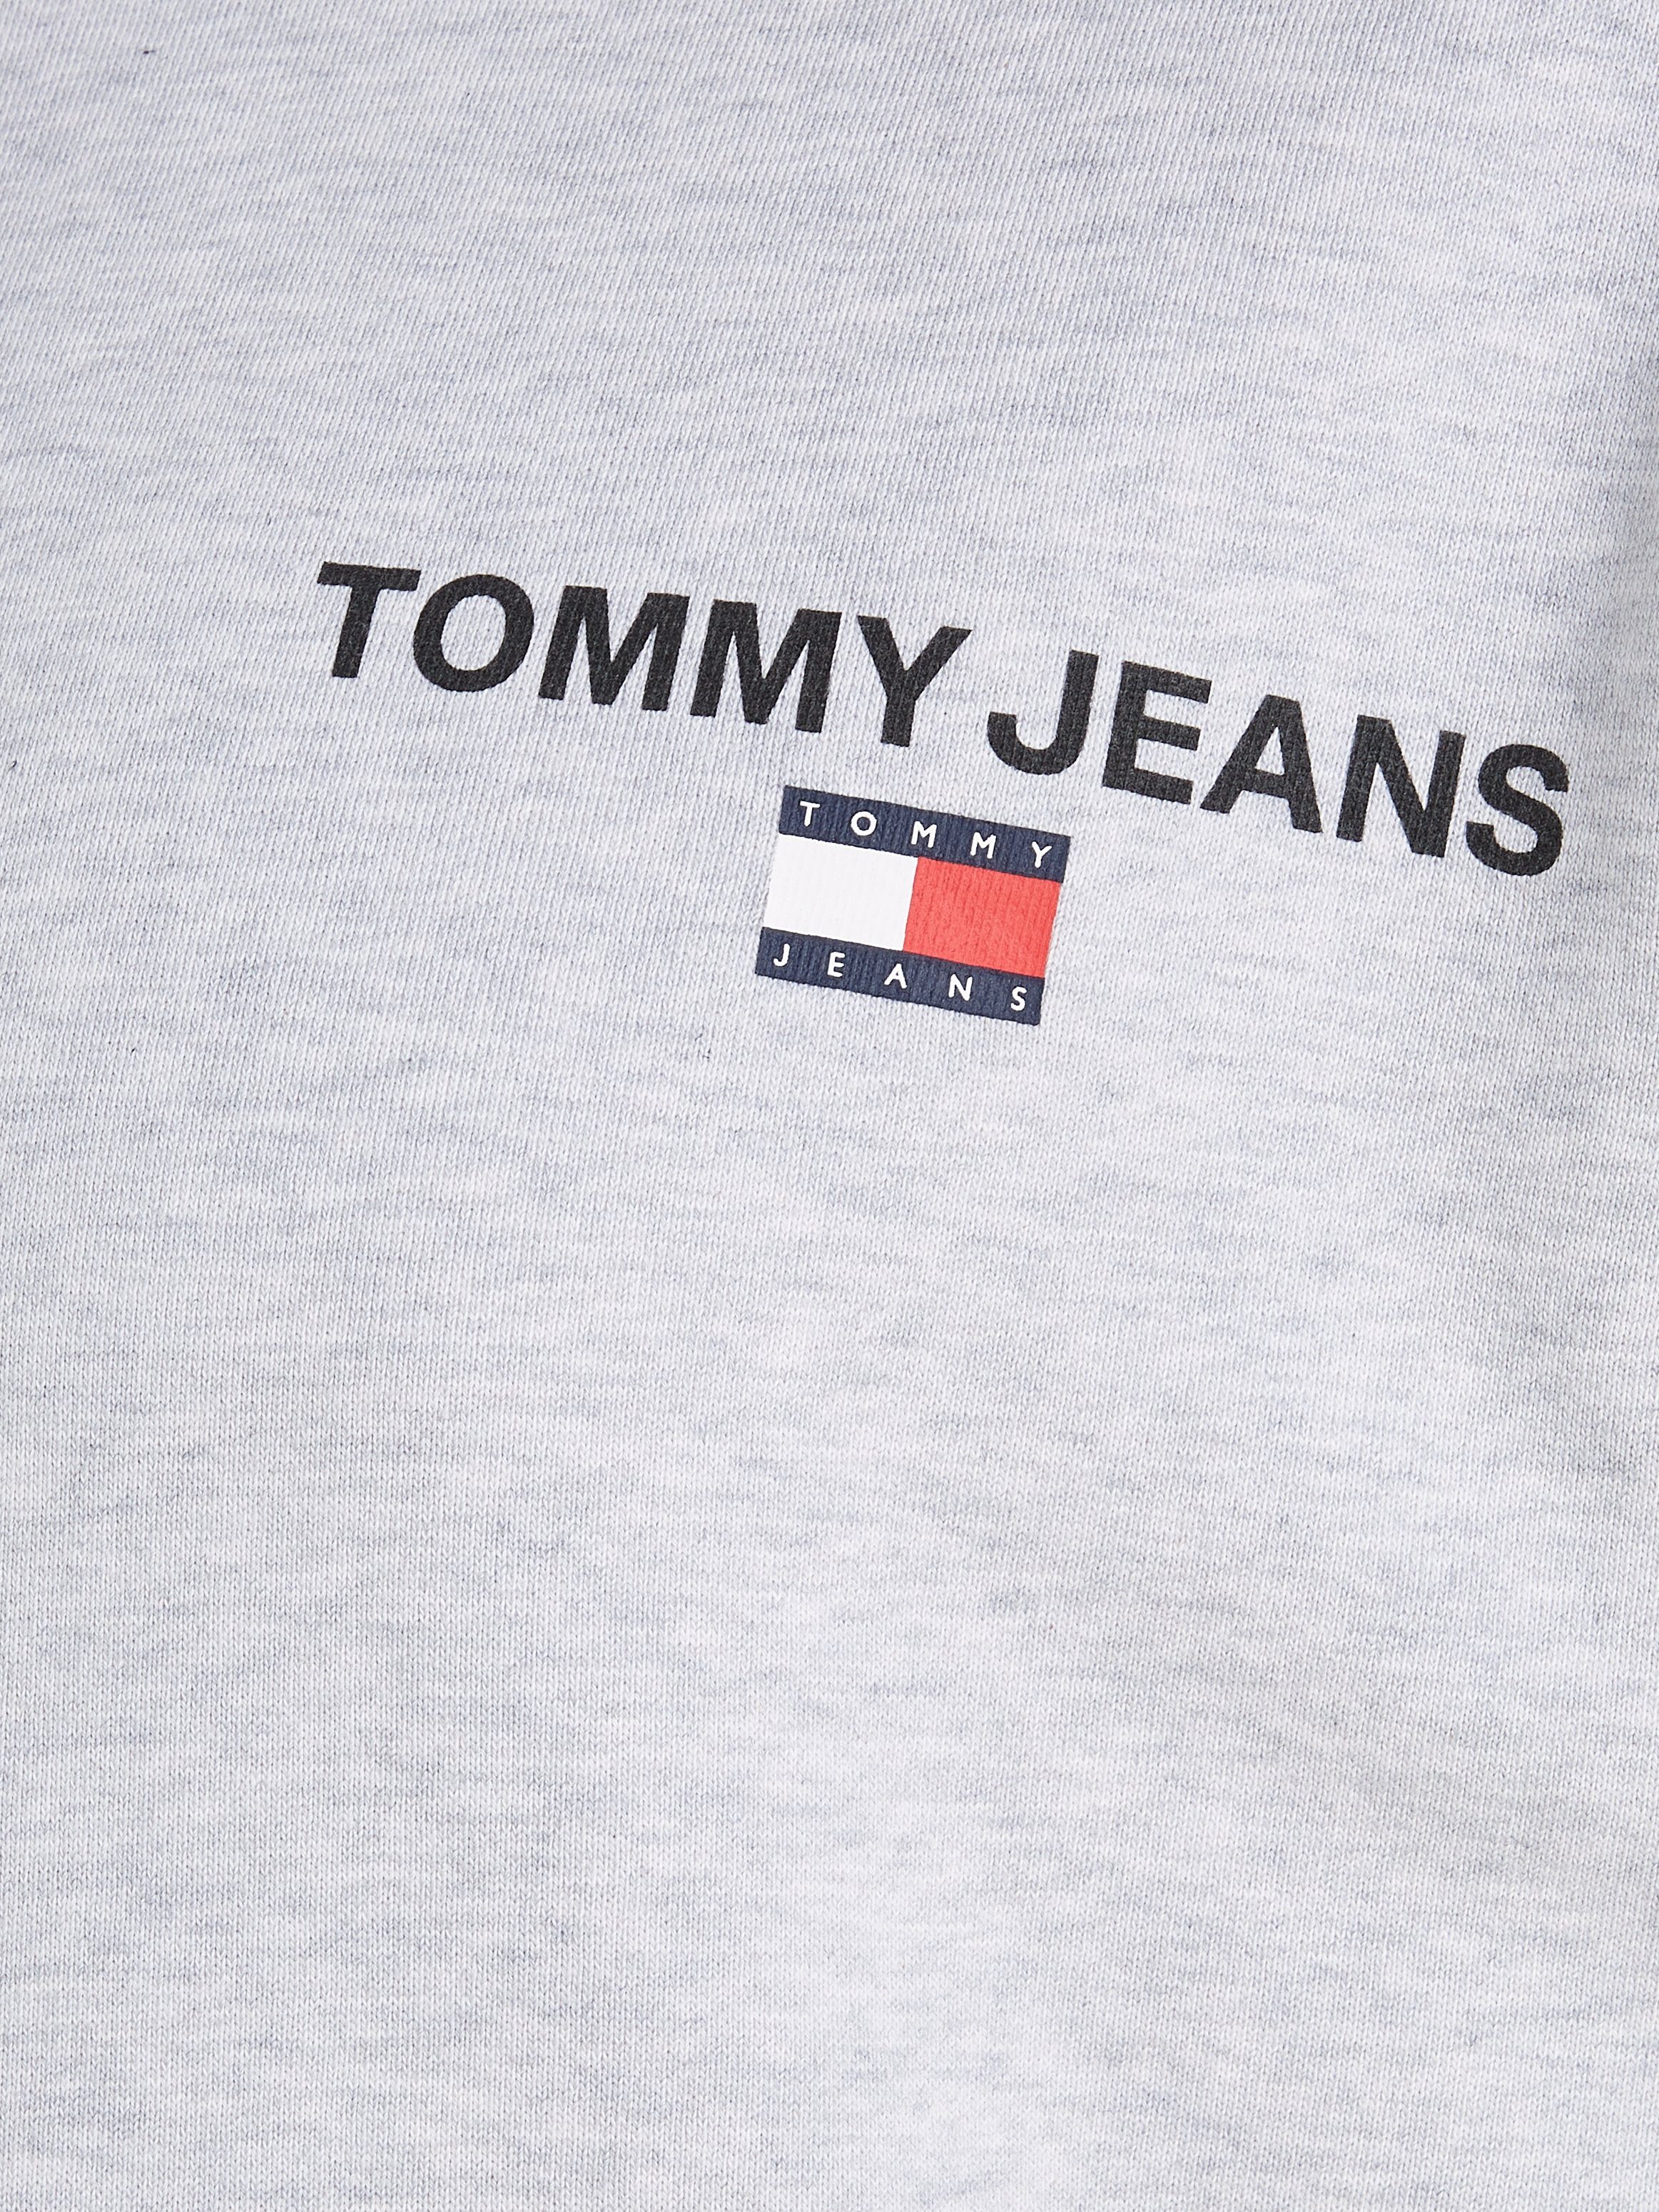 Plus HOOD Tommy Jeans REG Grey Silver TJM PLUS Hoodie GRAPHIC Htr ENTRY